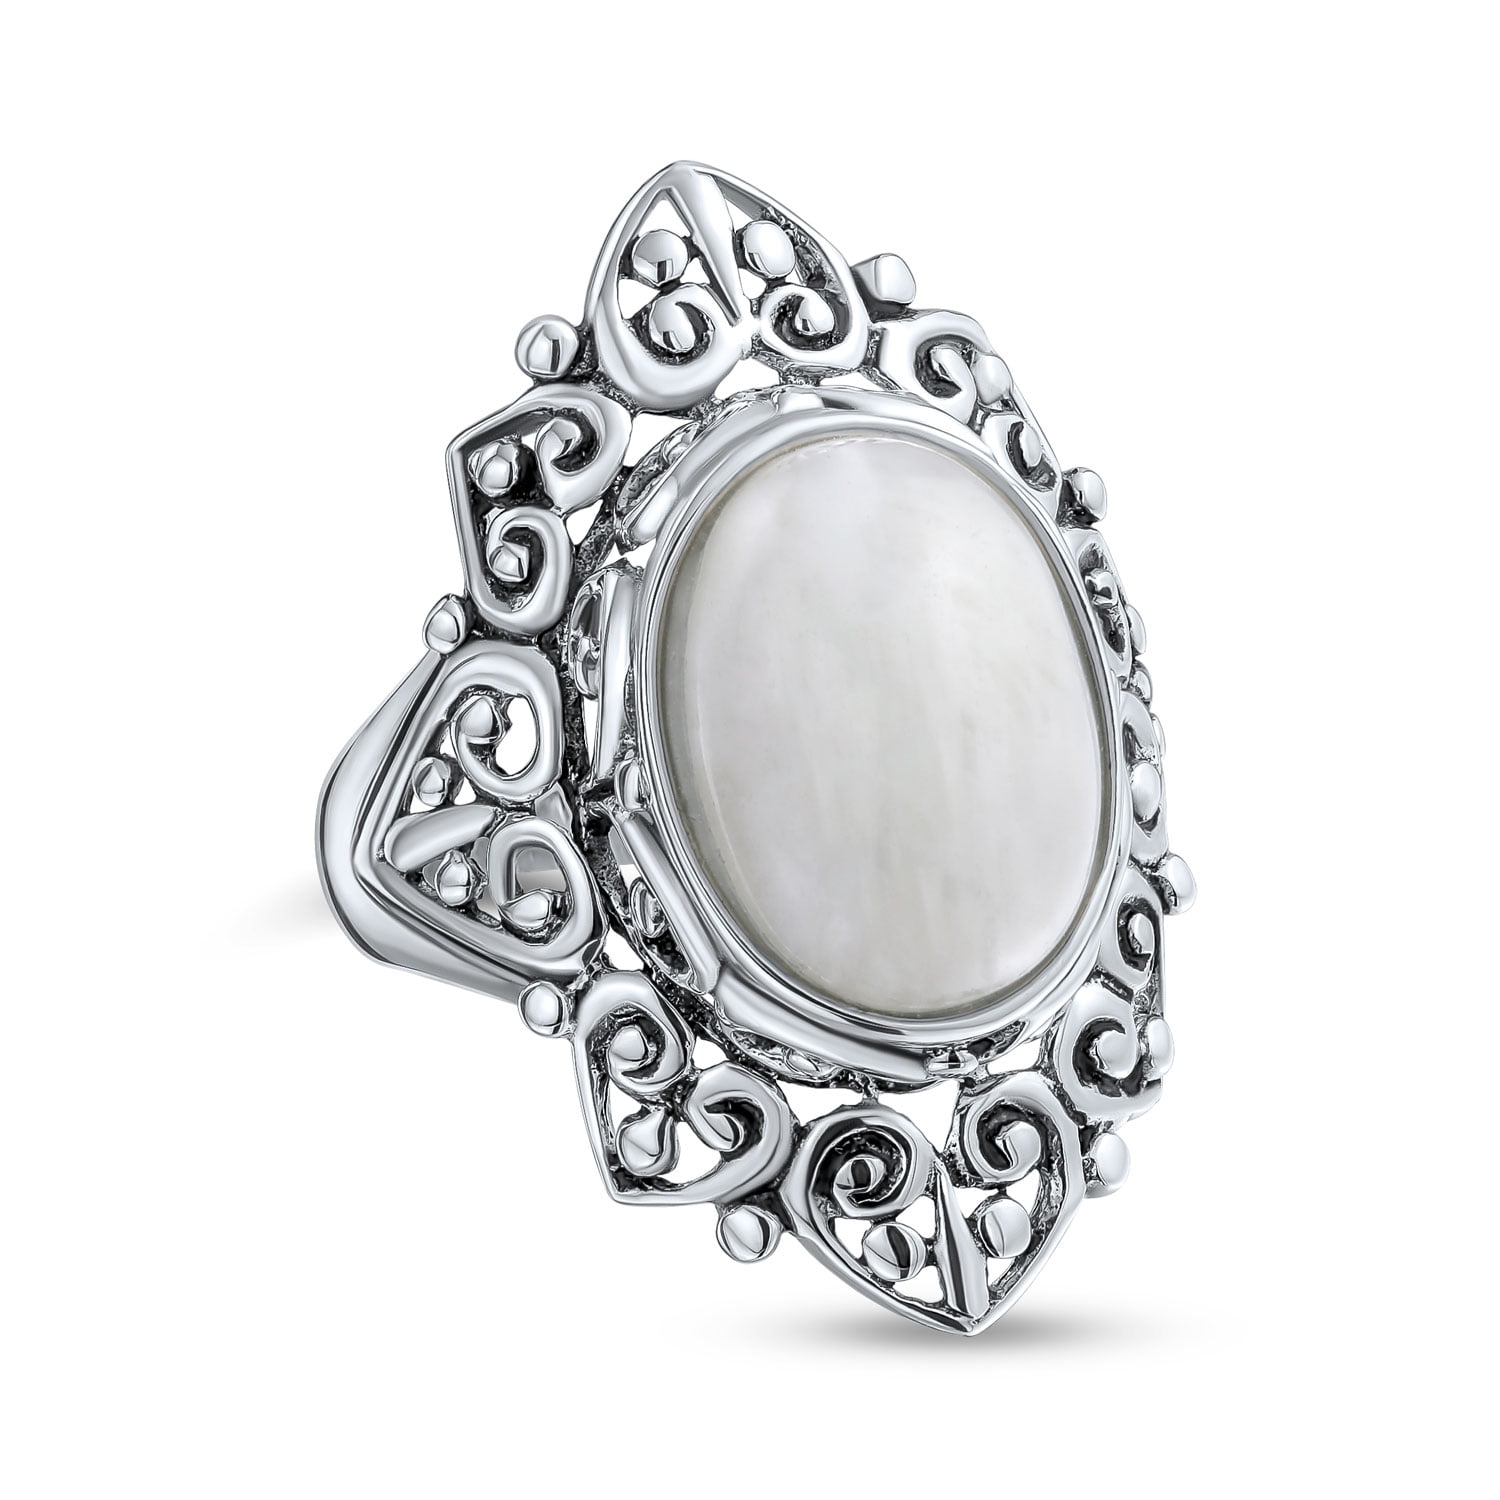 Natural Super Seven Gemstone 3.80 Carat Oval Shape Semi Precious Cabochon Gemstone Handmade Jewelry for Beautiful Making Gift